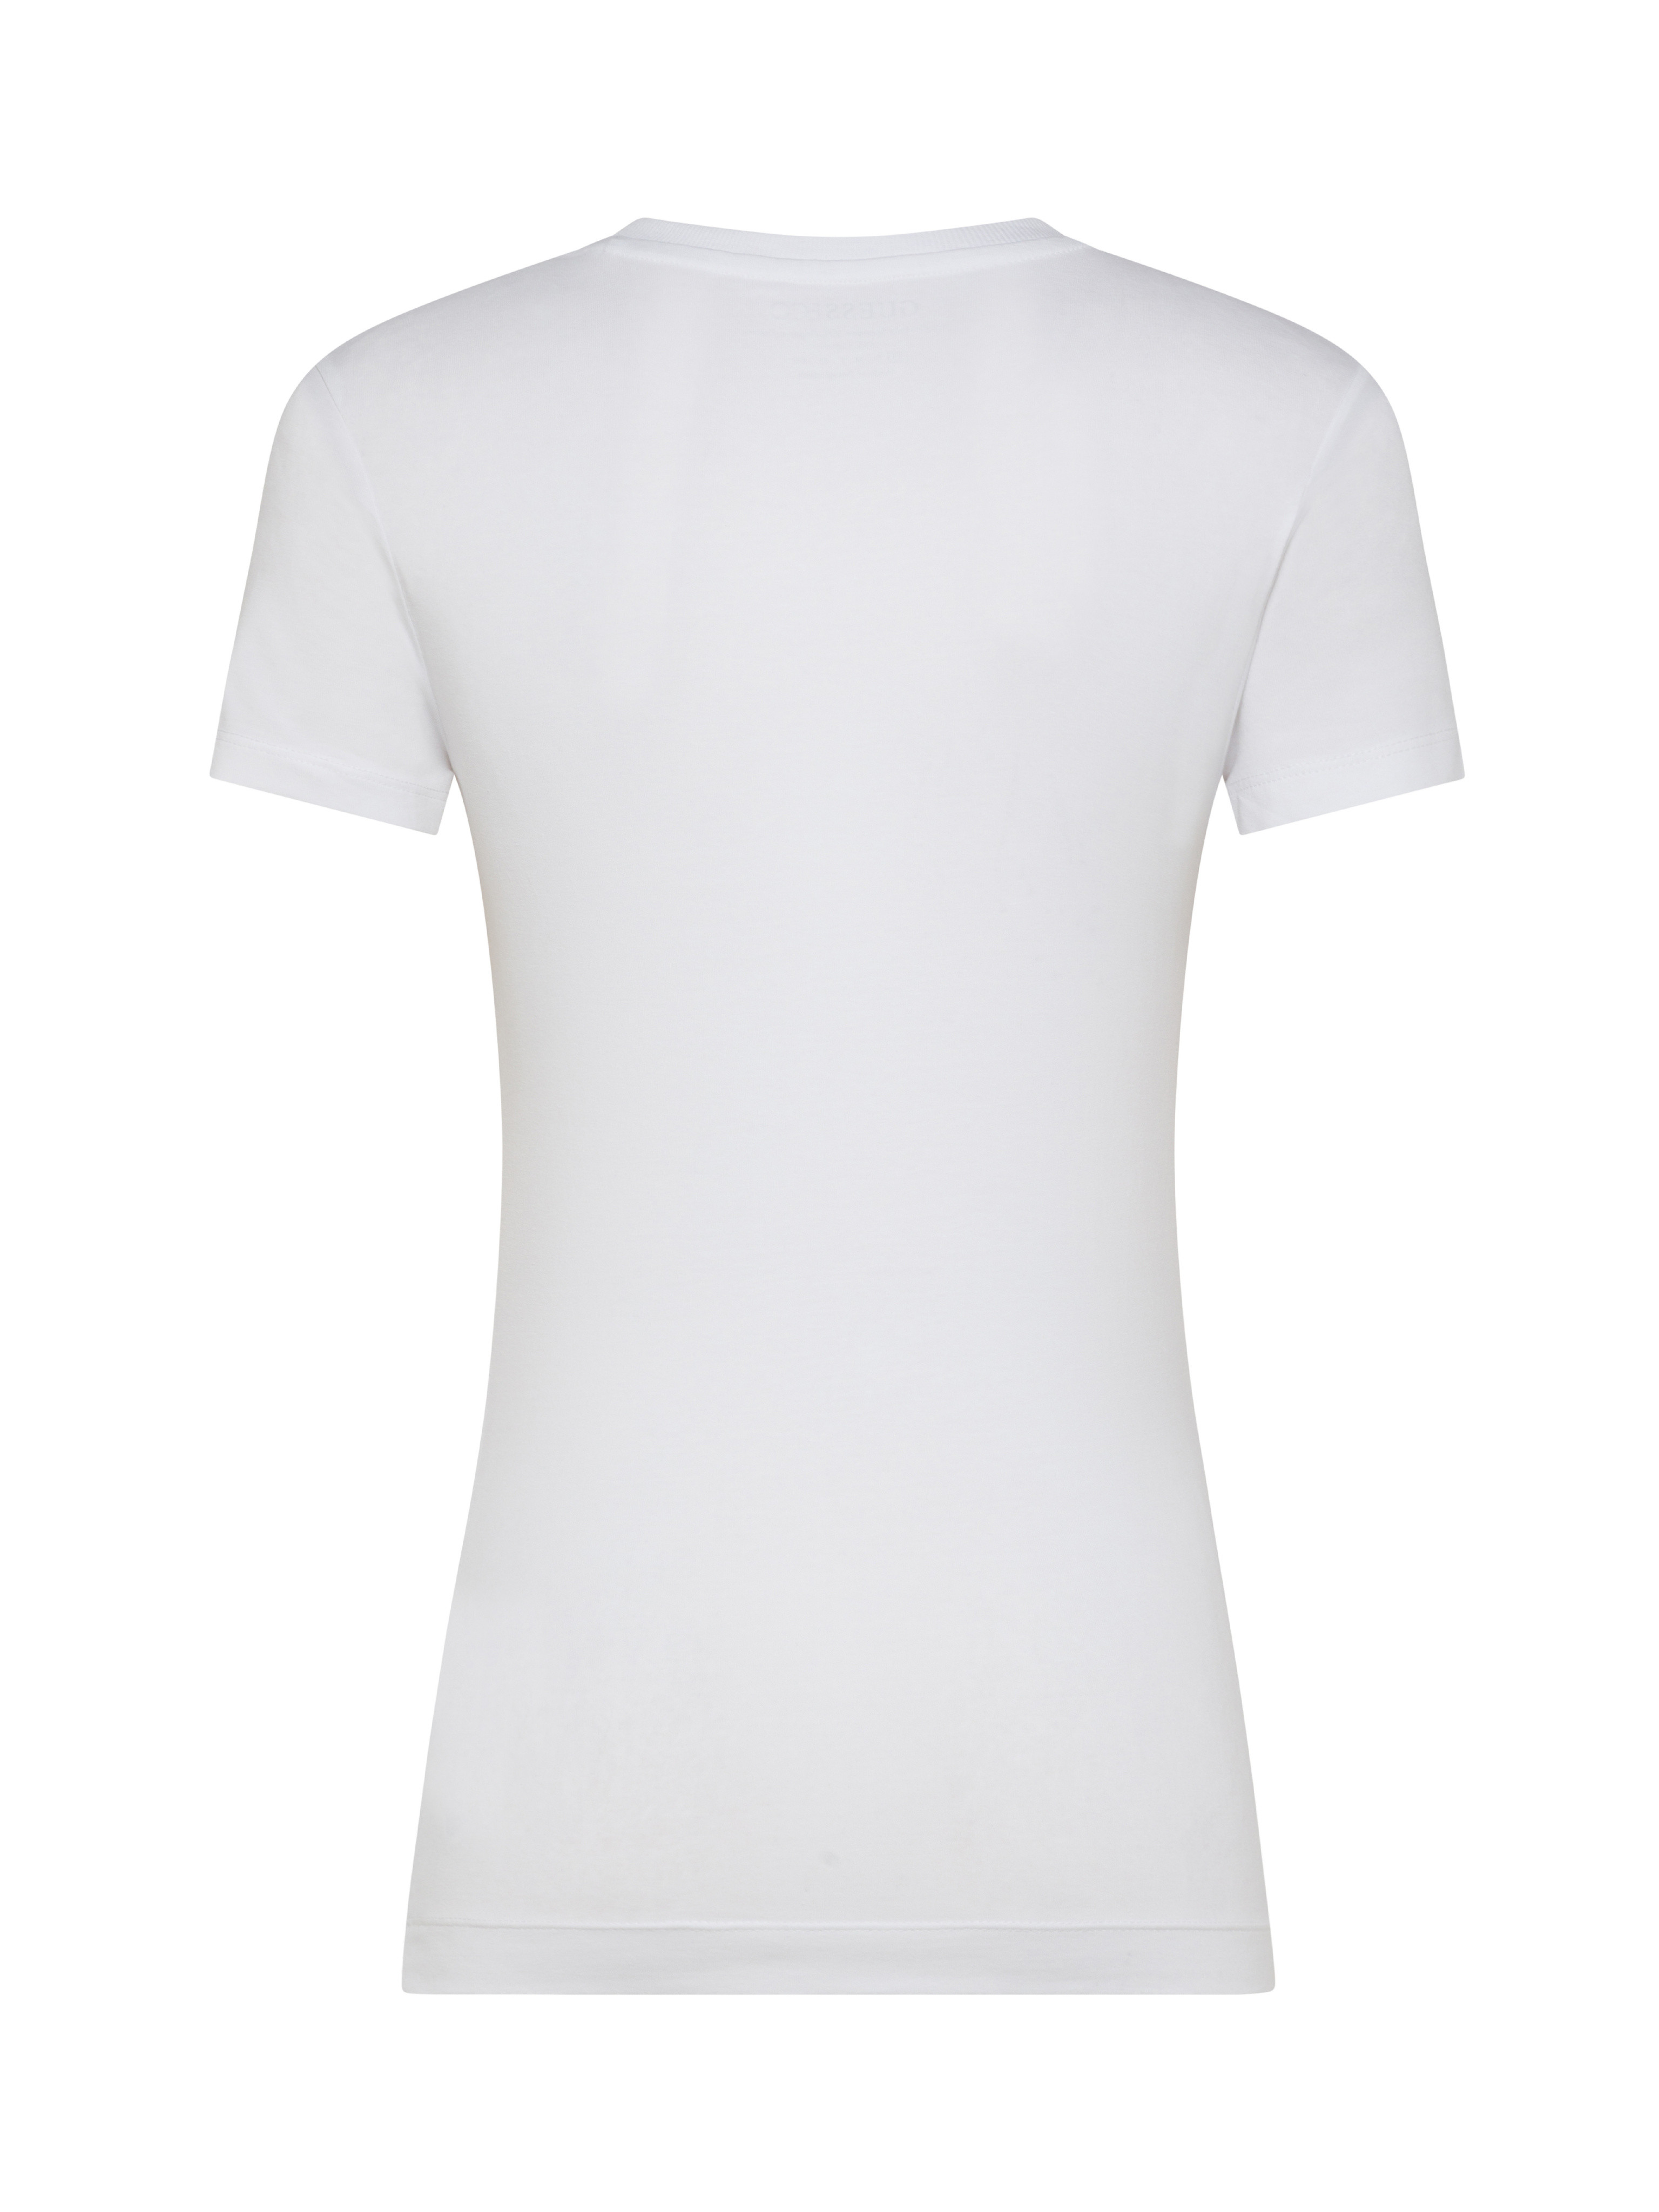 GUESS - T-shirt logo, Bianco, large image number 1